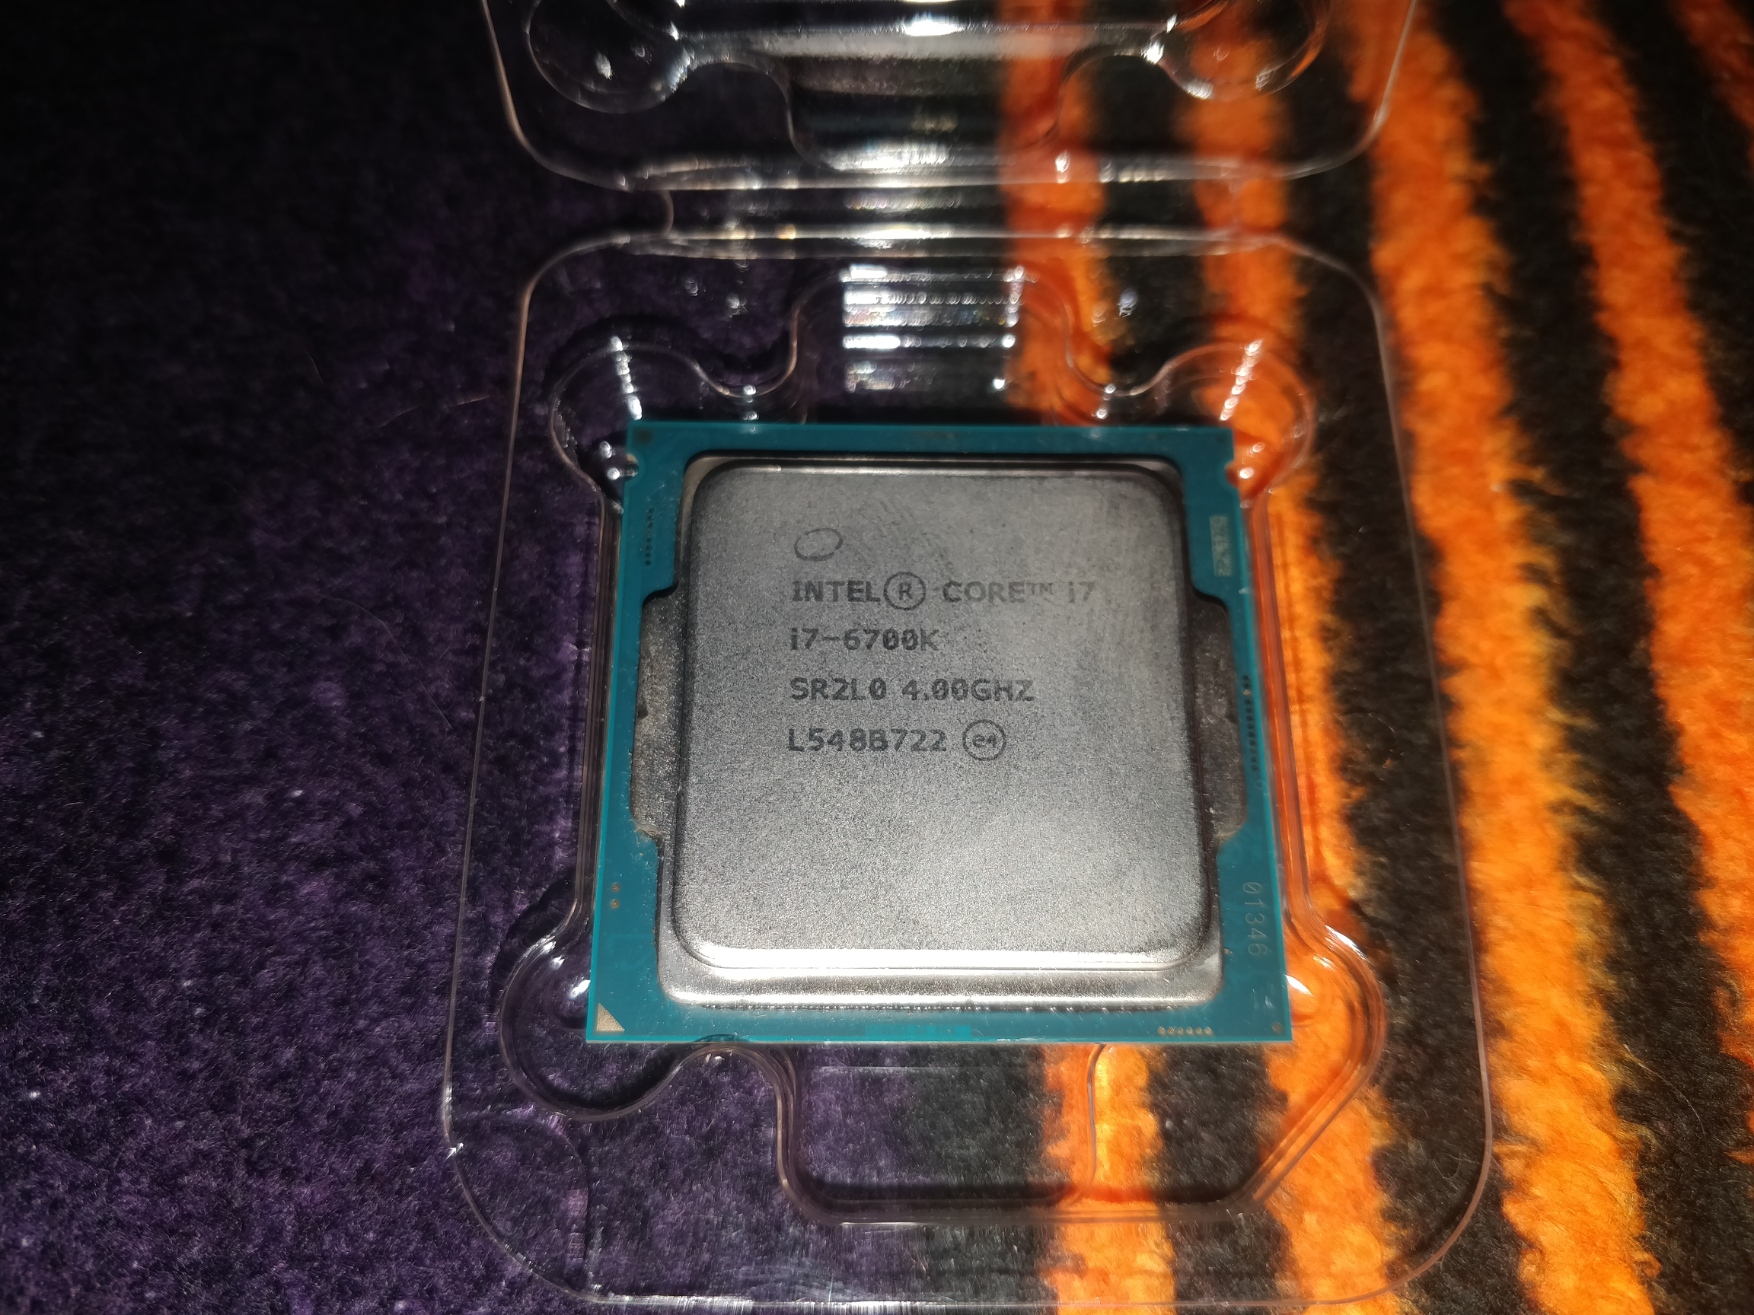 Intel i7 6700K + Asus Z170 Pro Gaming + G.Skill 2x8GB 2400Mhz (satıldı)